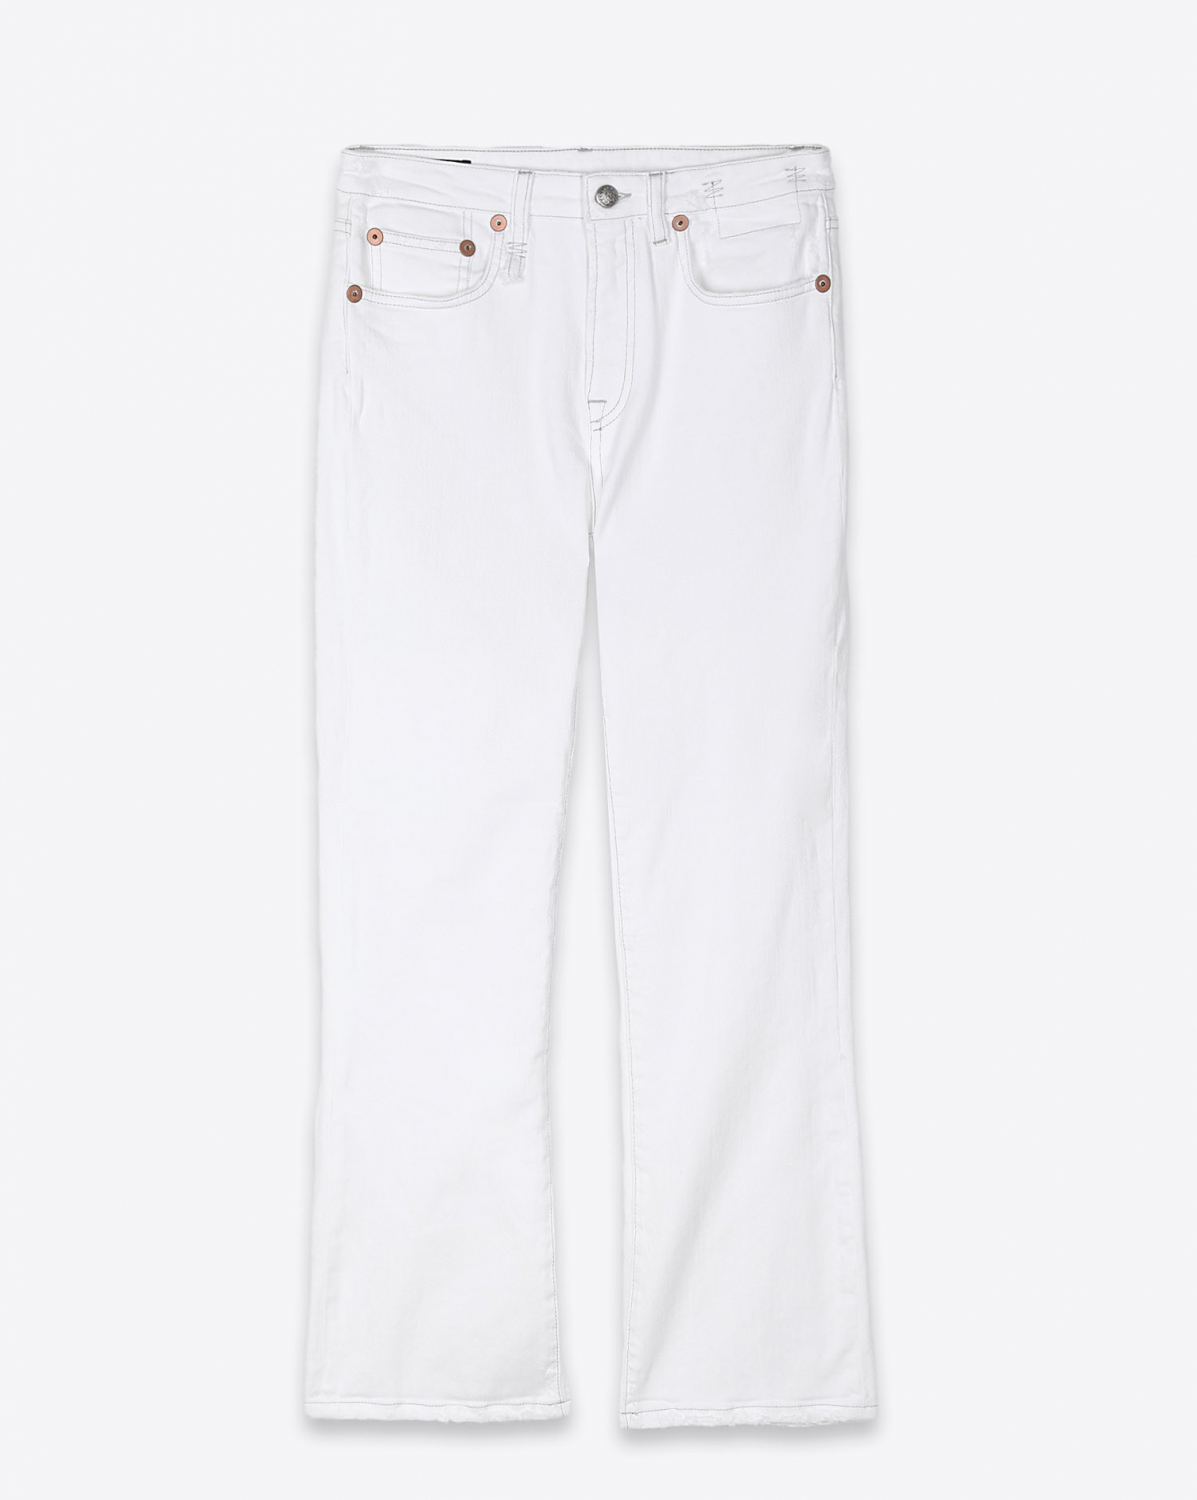 Jeans R13 Denim Collection Kick Fit - Bale White